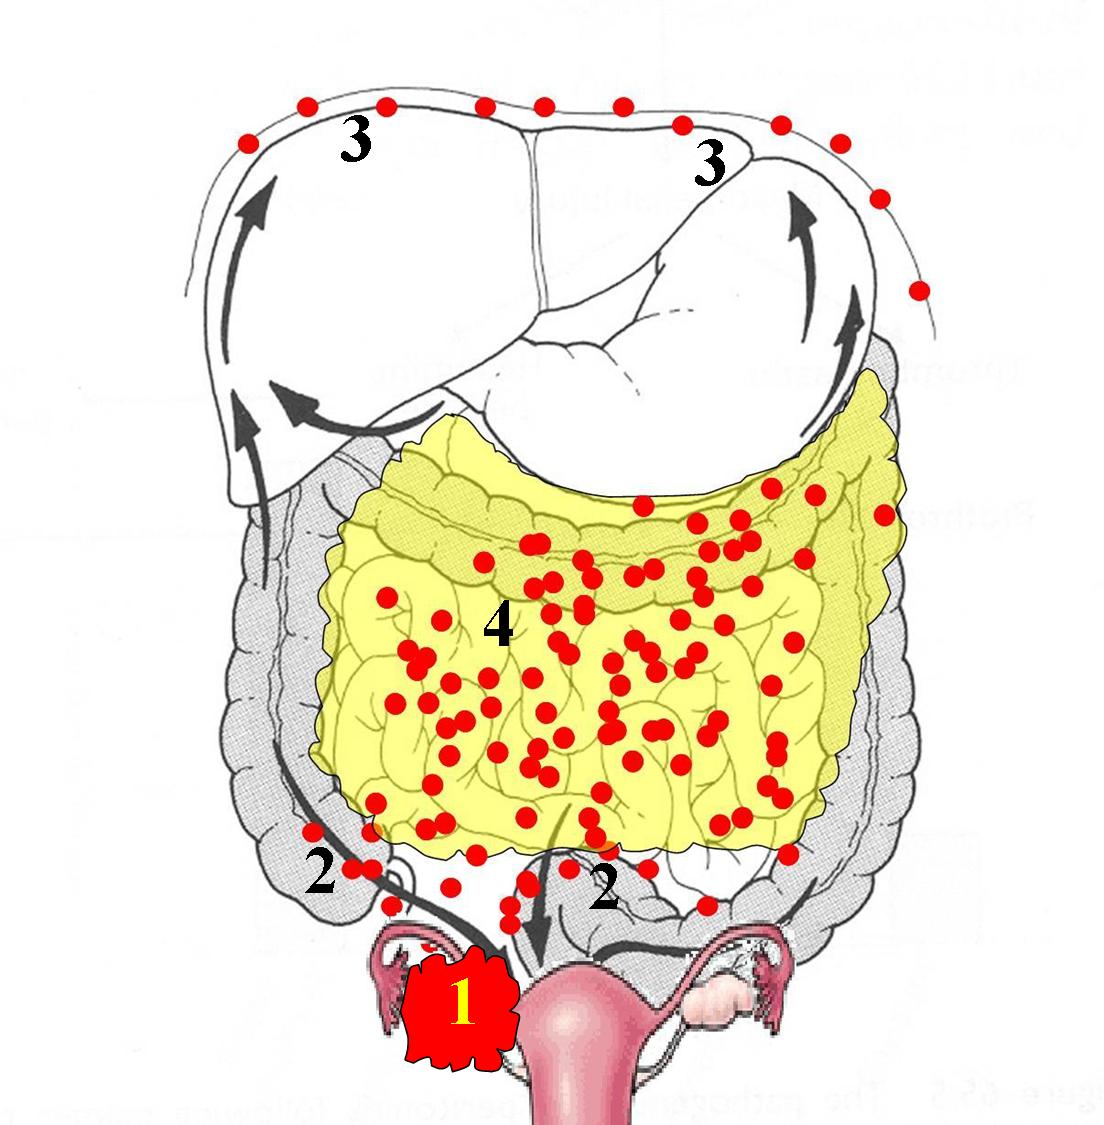 Peritoneal cancer operation - Peritoneal cancer operation